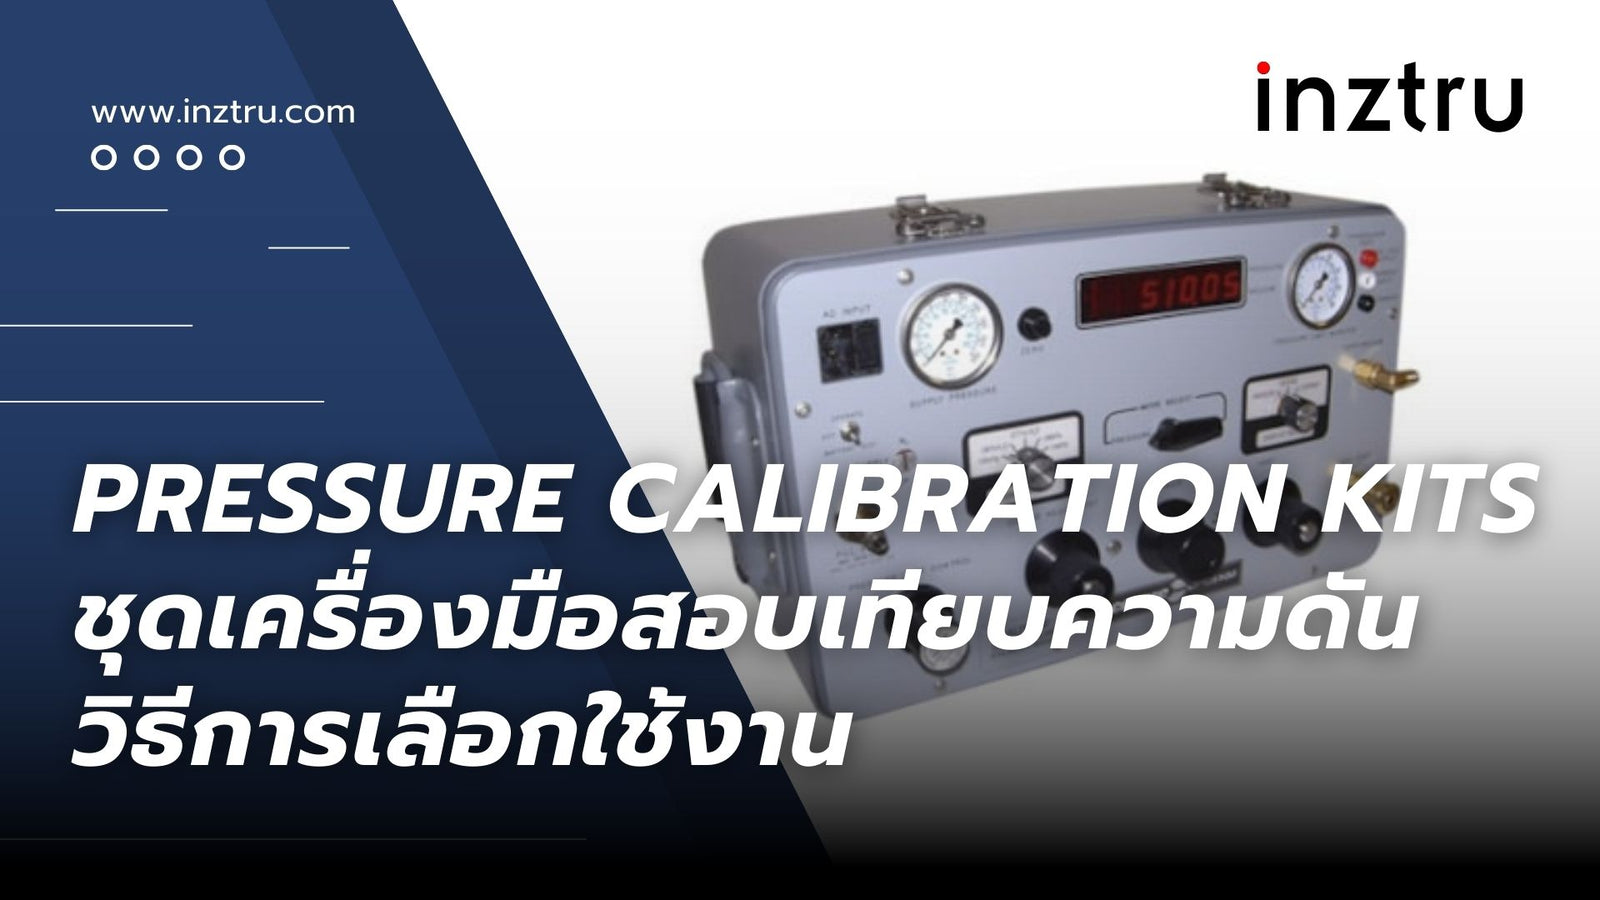 Pressure Calibration Kits ชุดเครื่องมือสอบเทียบความดัน : วิธีการเลือกใช้งาน